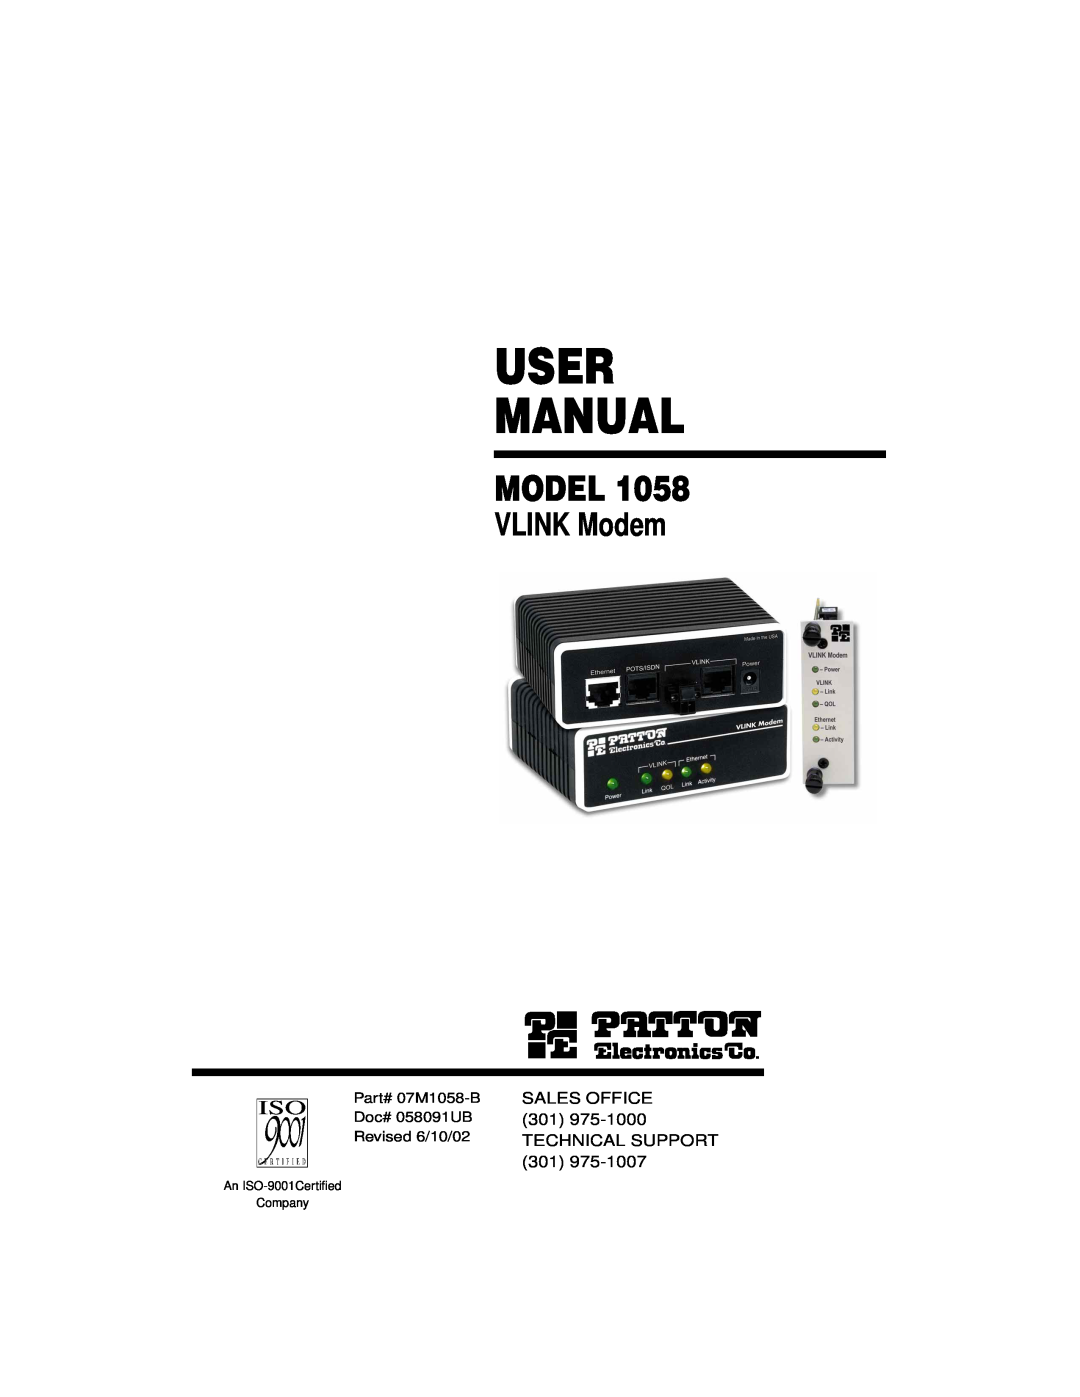 Patton electronic user manual Model, VLINK Modem, Part# 07M1058-B, Doc# 058091UB, Revised 6/10/02 